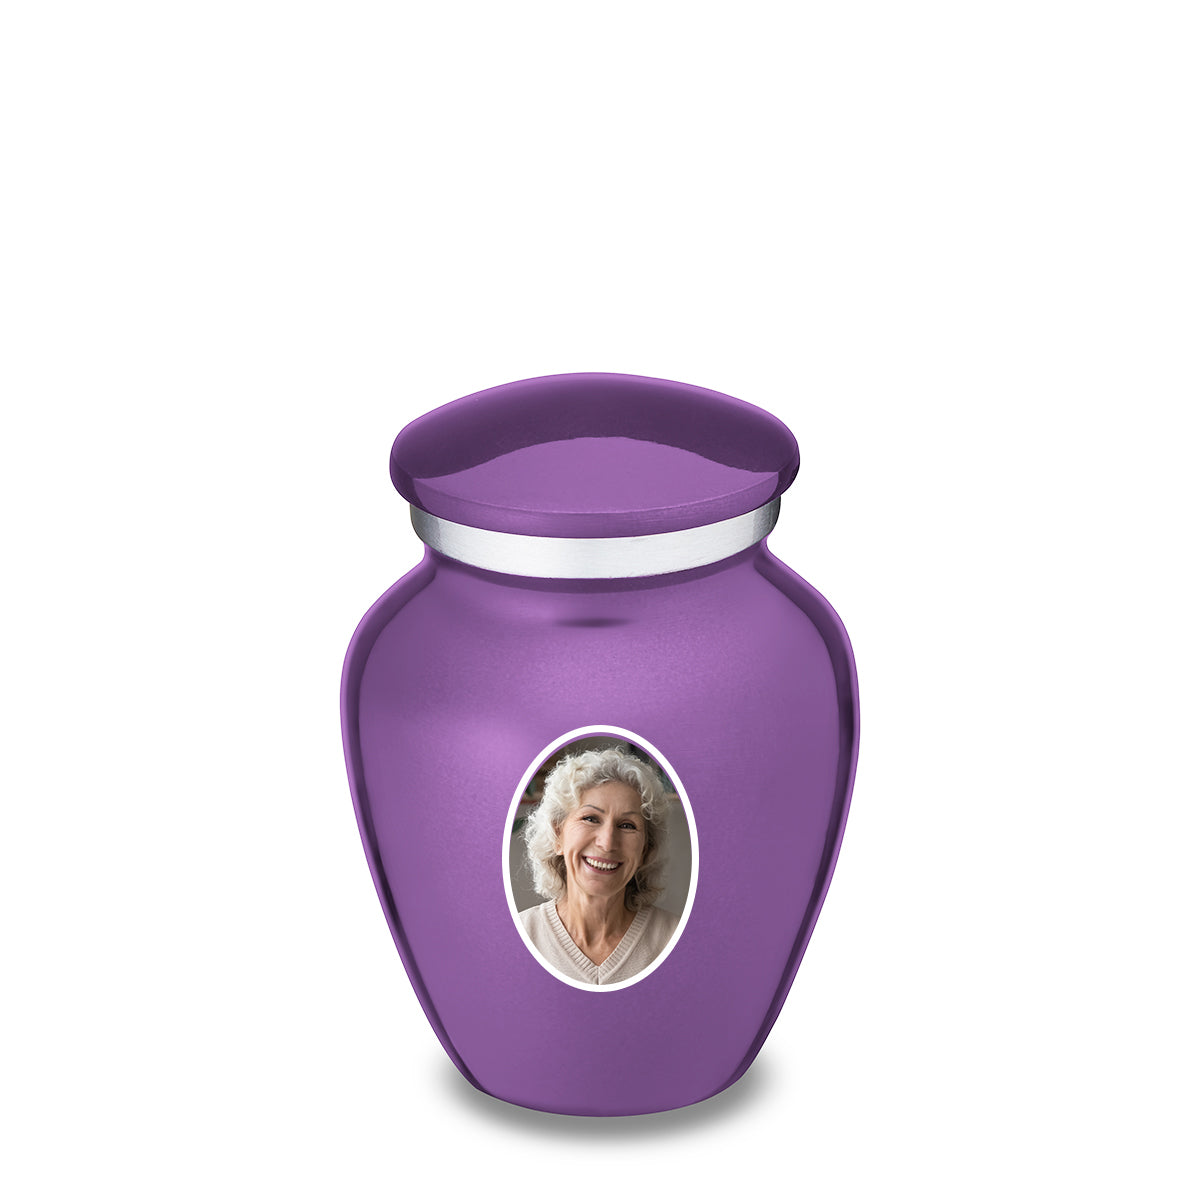 Keepsake Embrace Purple Portrait Cremation Urn